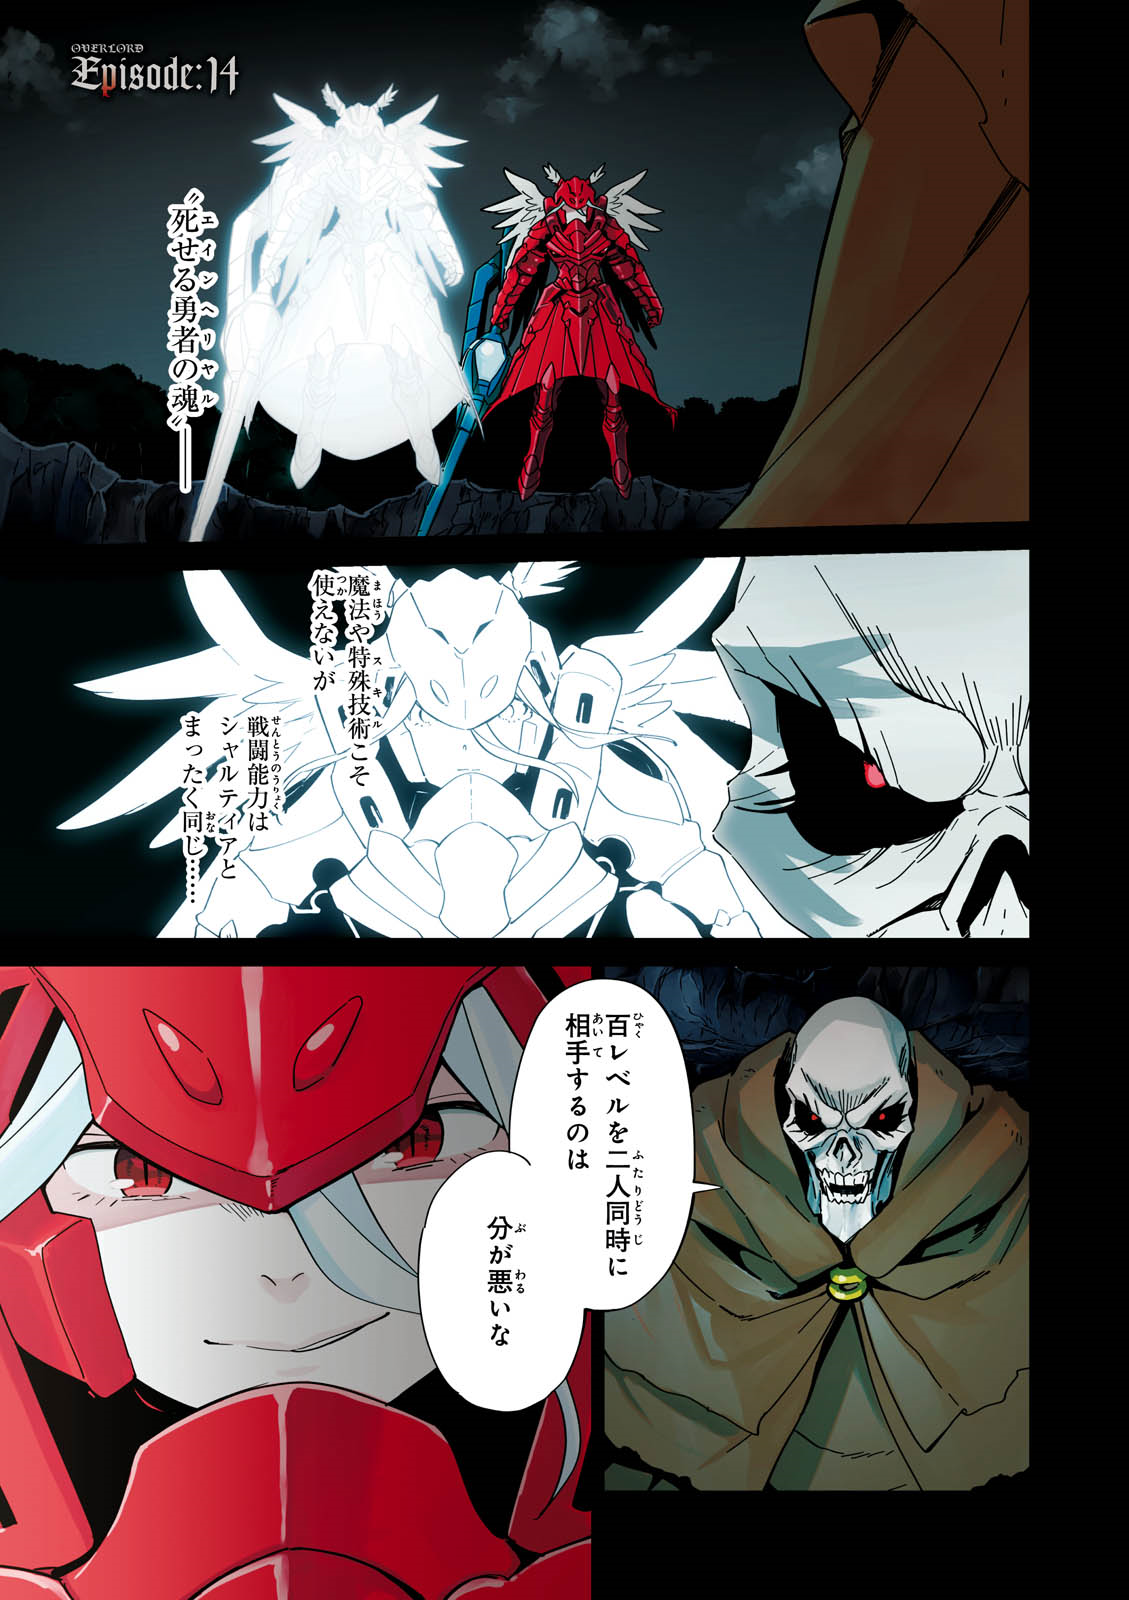 Overlord Manga Volume 16  RightStuf